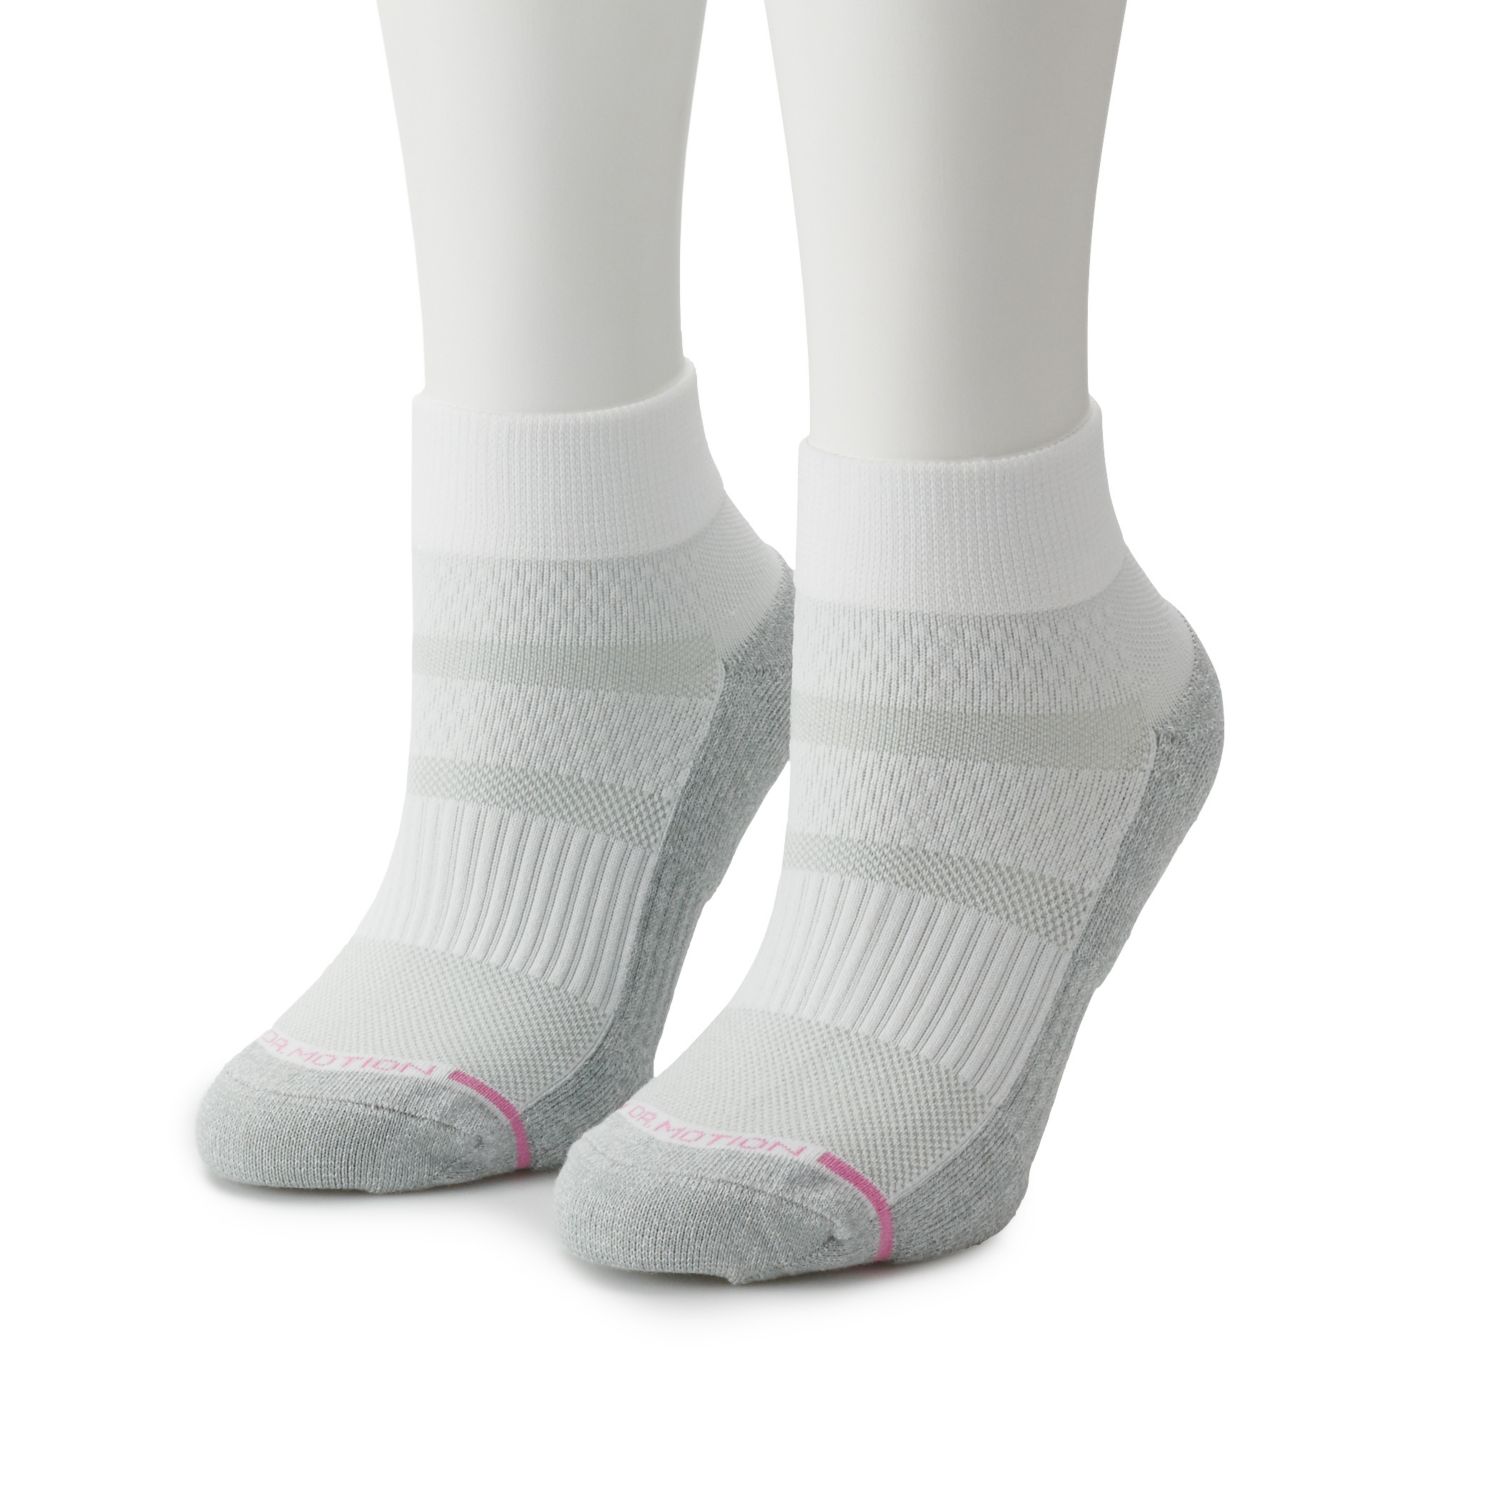 Image for Dr. Motion Women's Everyday Compression Quarter Socks at Kohl's.